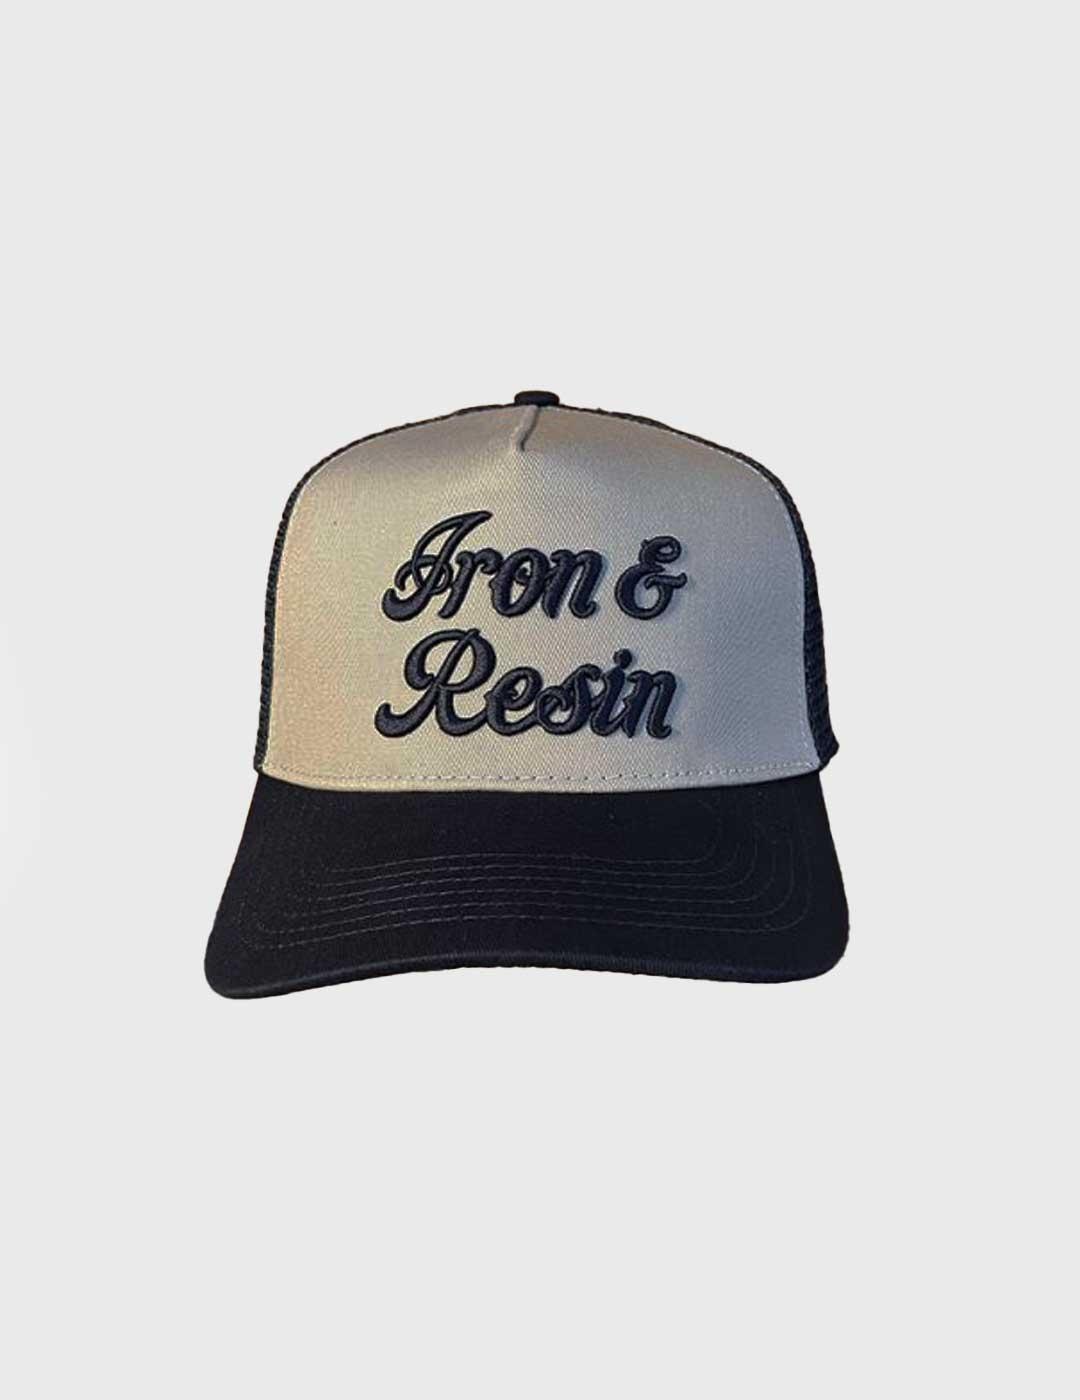 Iron And Reisn Legendary Hat Gorra marrón unisex